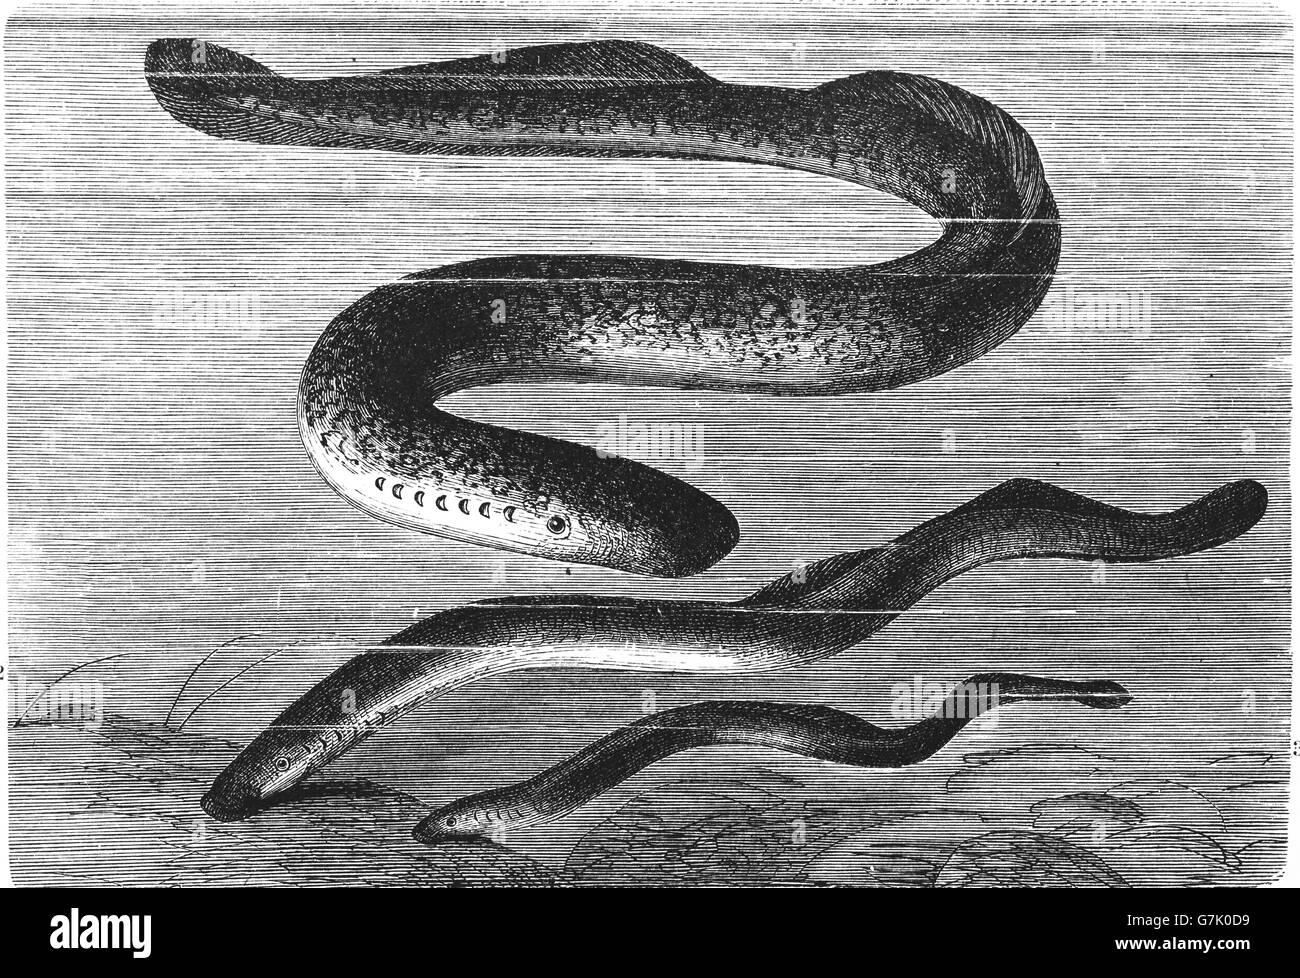 Sea lamprey, European river lamprey, brook lamprey, illustration from book dated 1904 Stock Photo